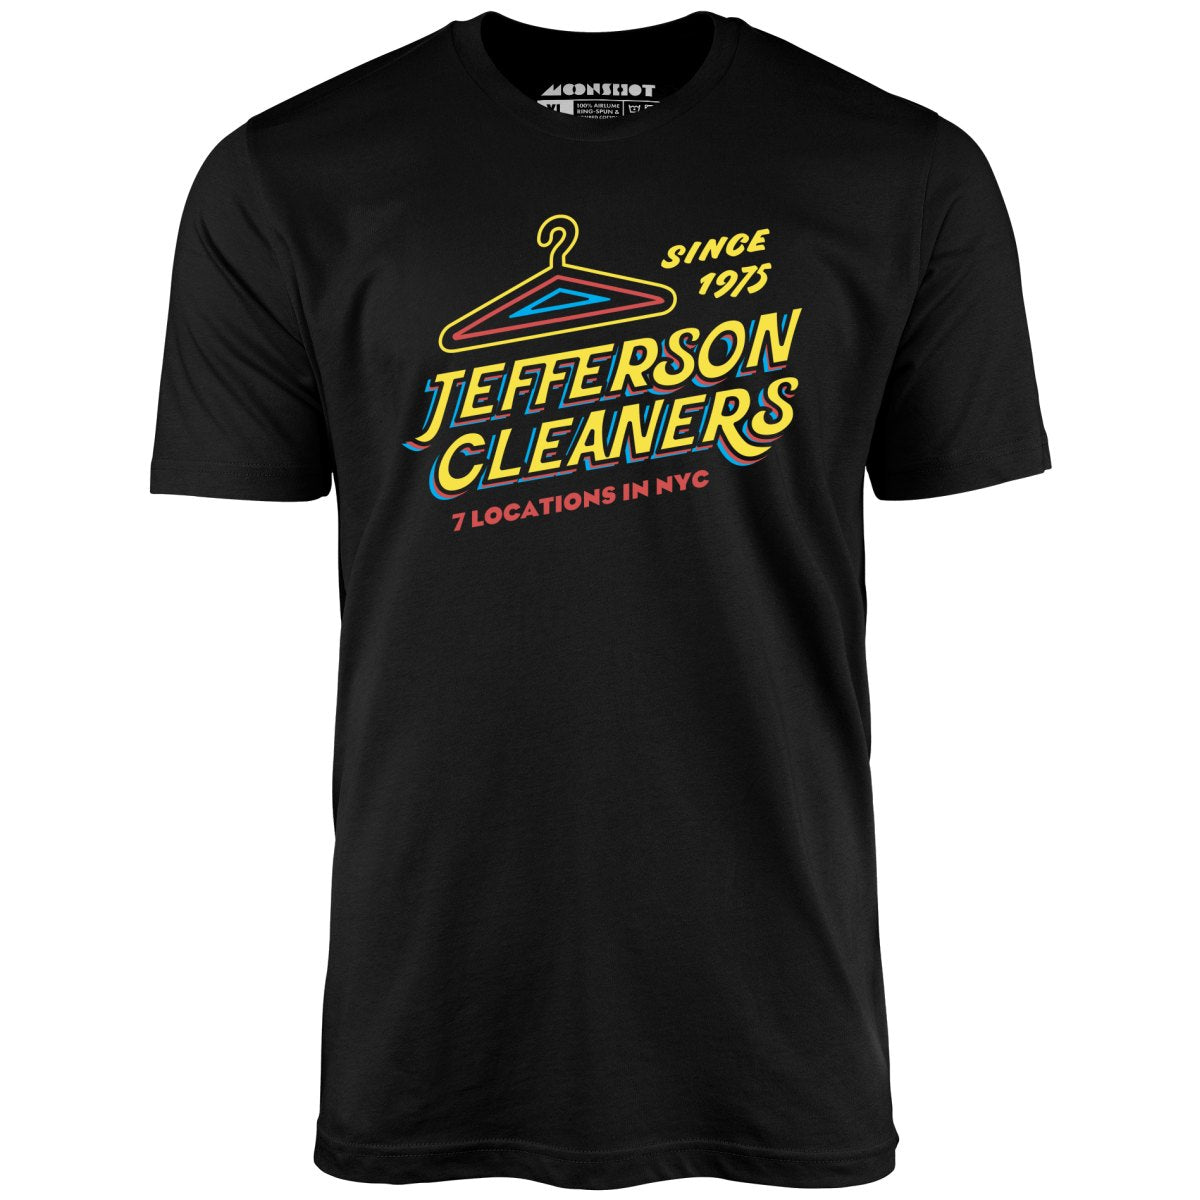 Jefferson Cleaners - Unisex T-Shirt